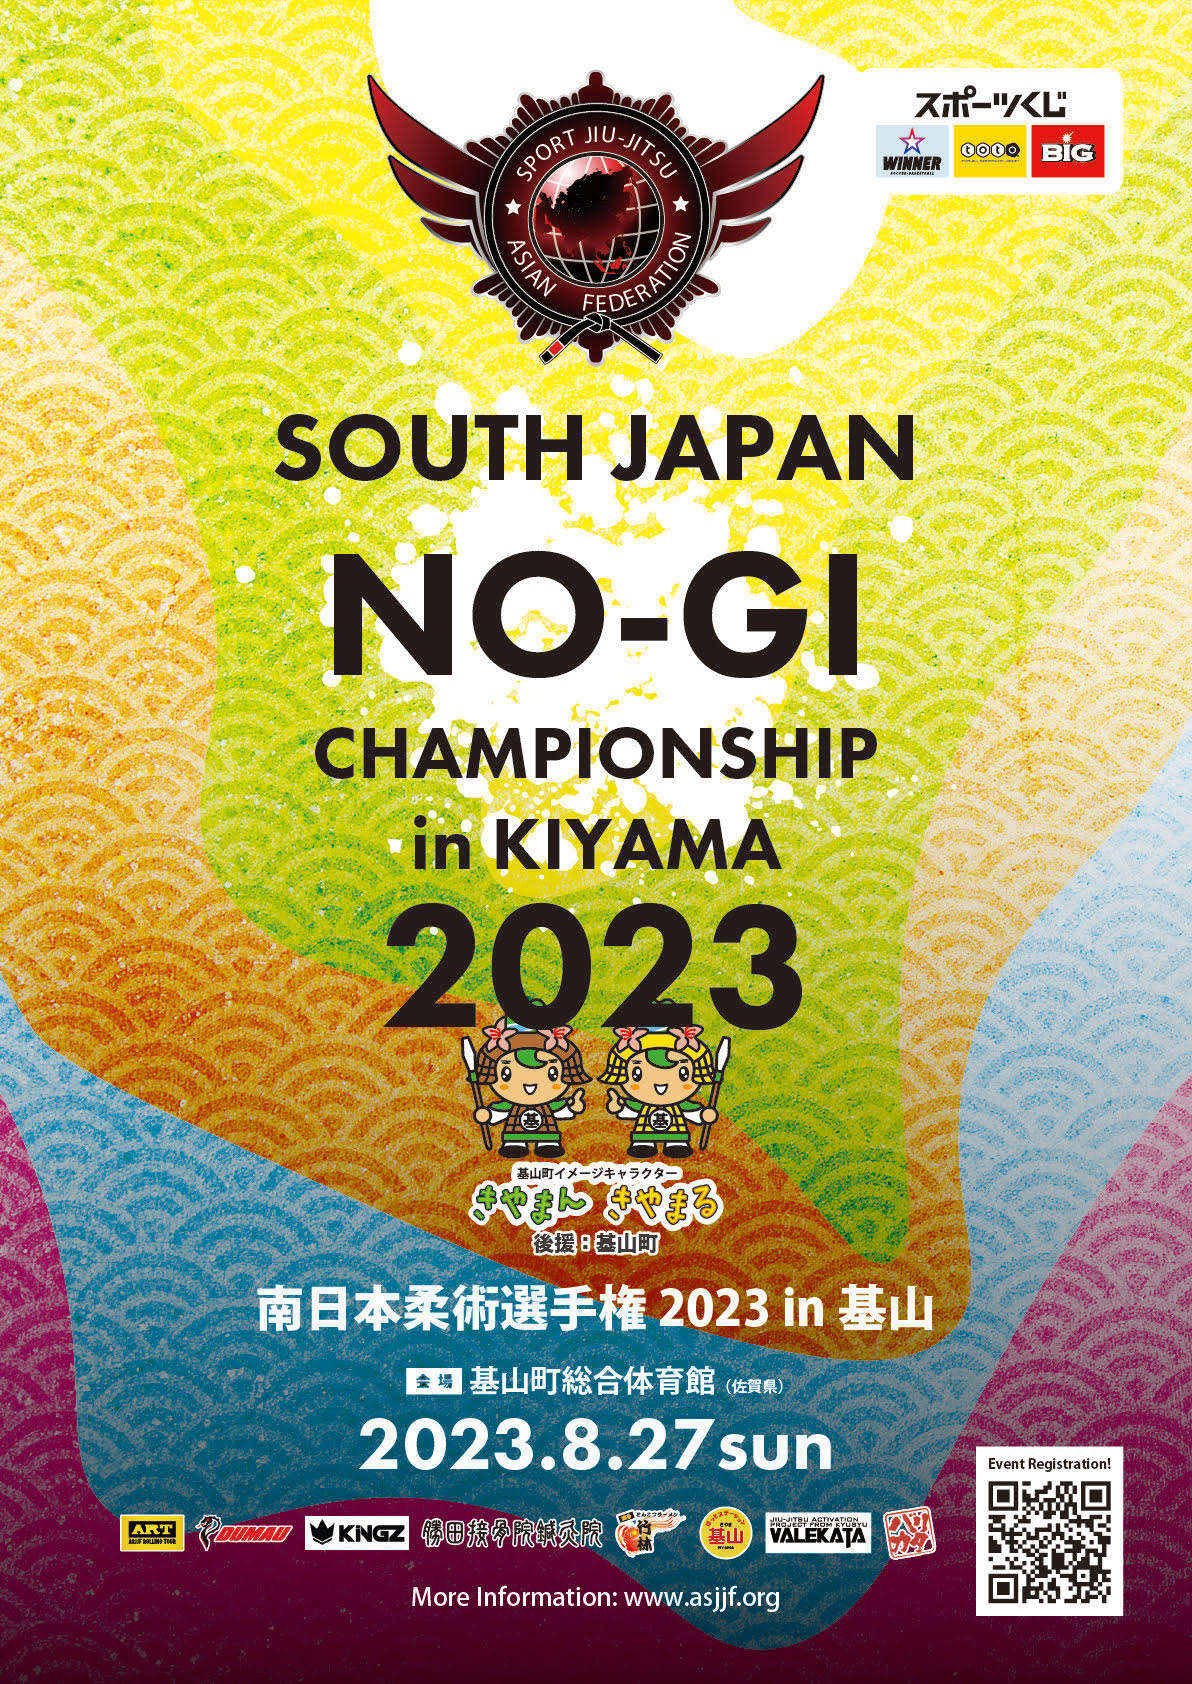 south japan no-gi championship 2023 in kiyama